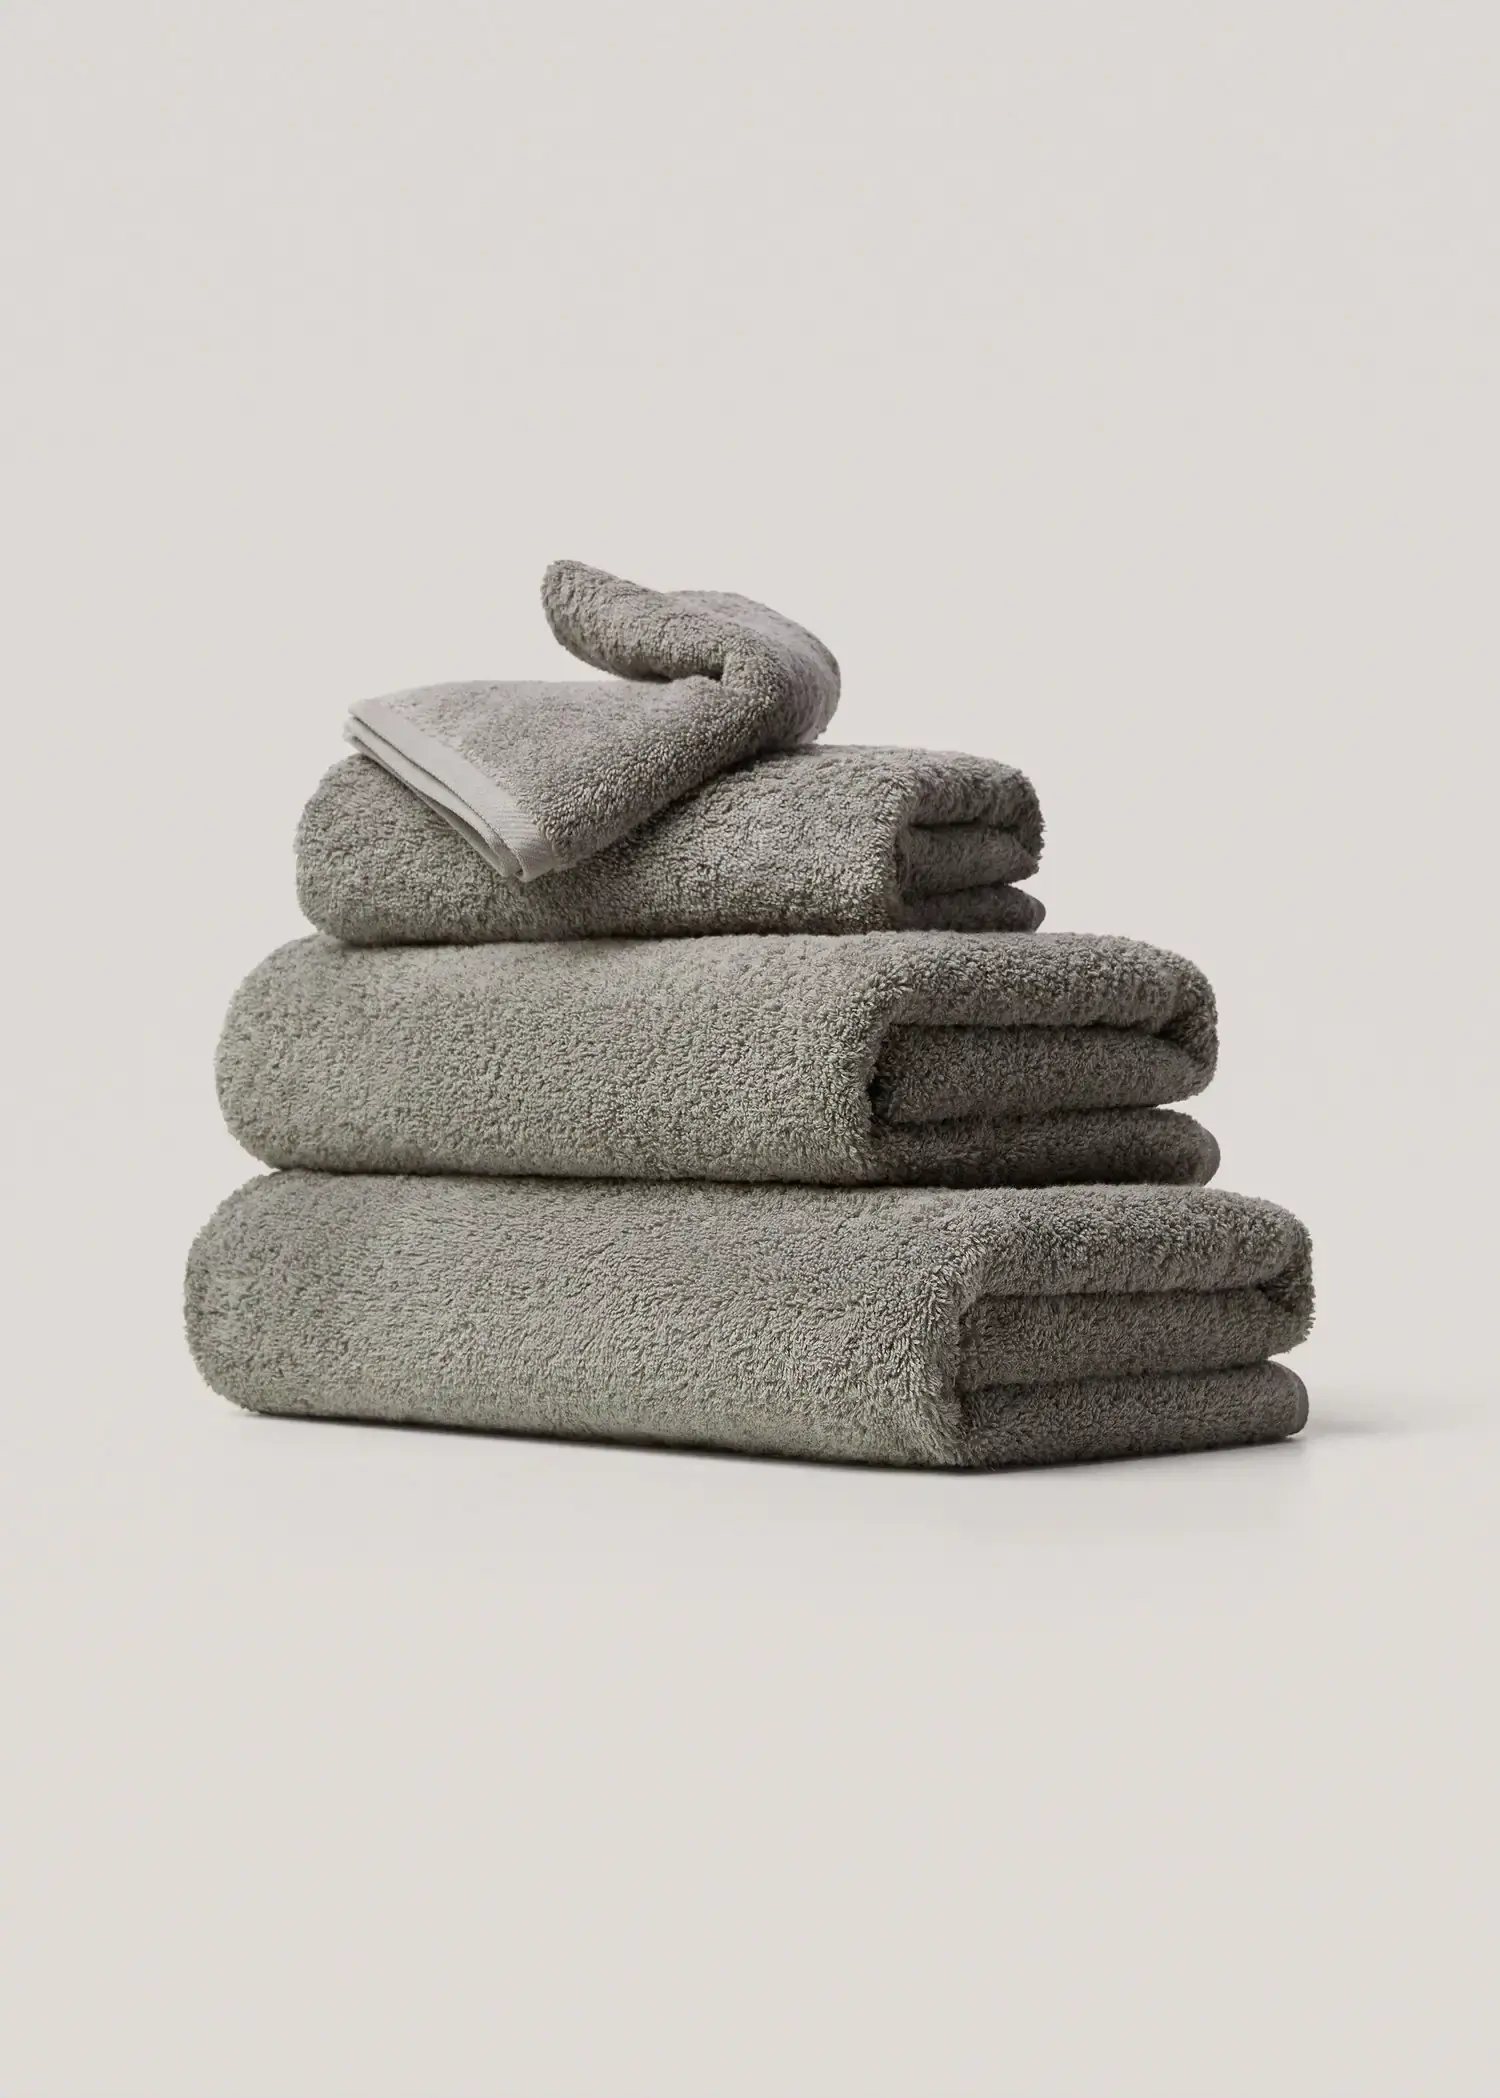 Mango 500gr/m2 cotton bath towel 90x150cm. 1